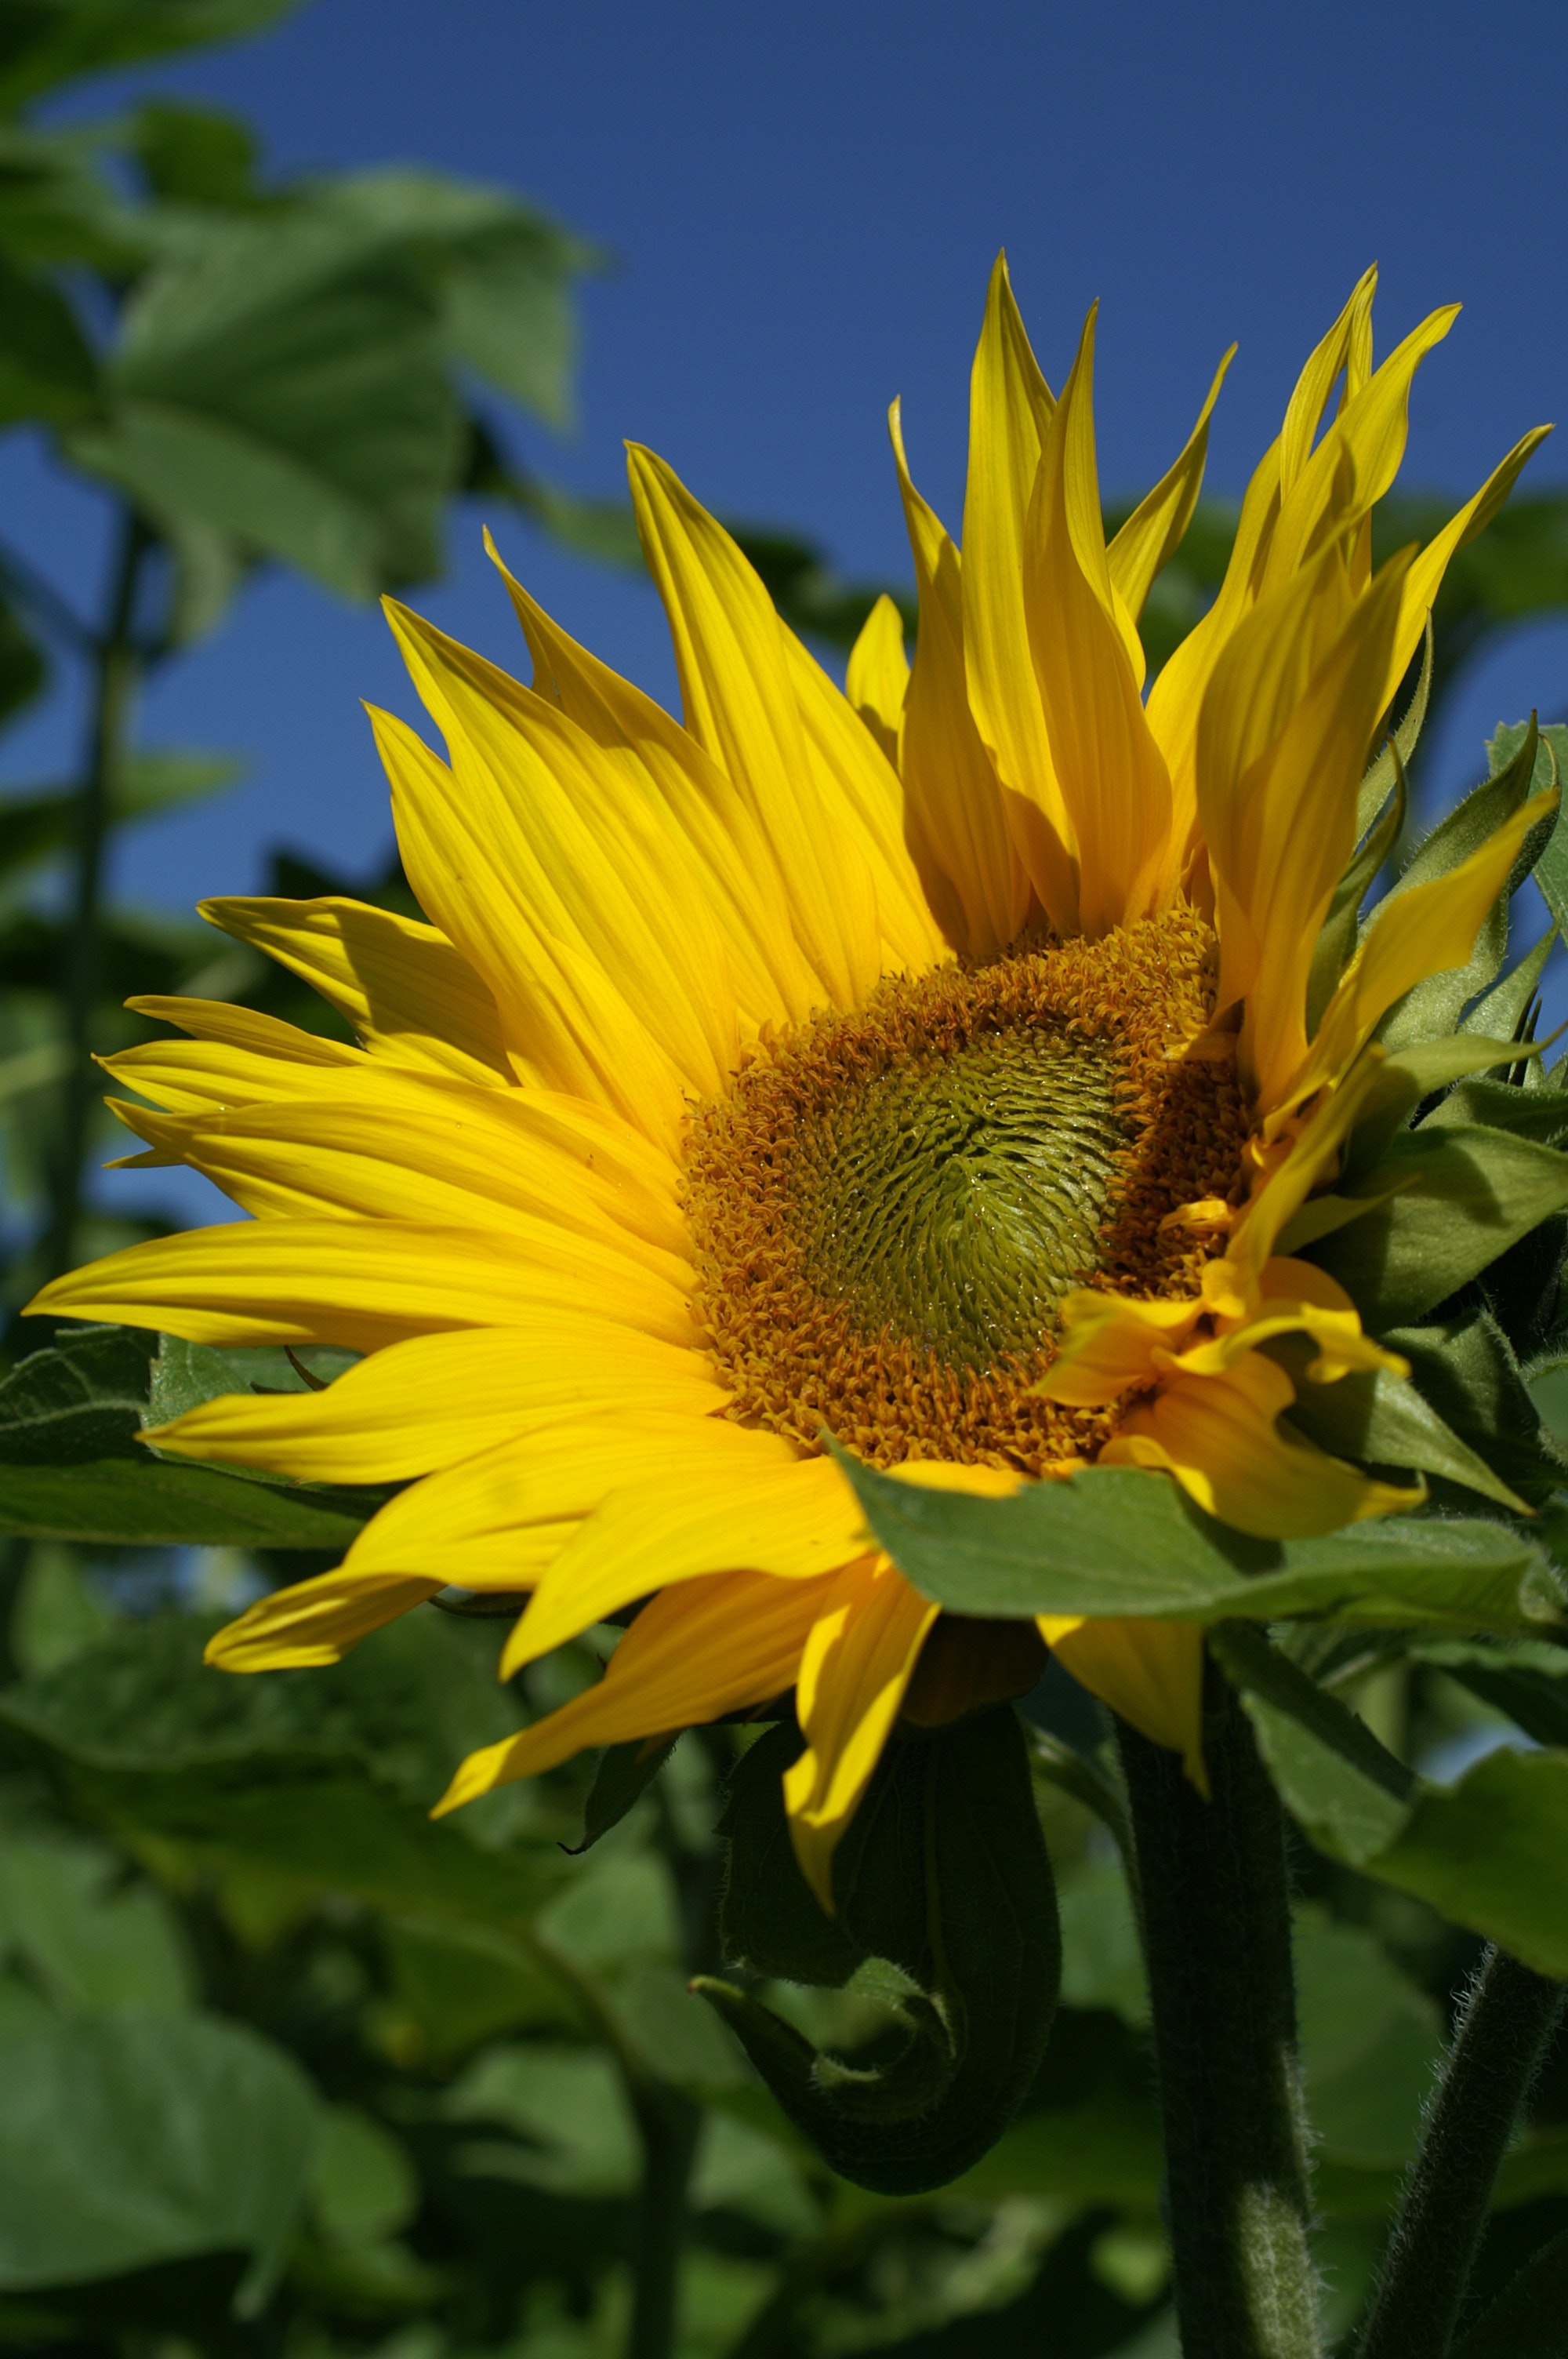 Sunflower under blue sky during daytime photo